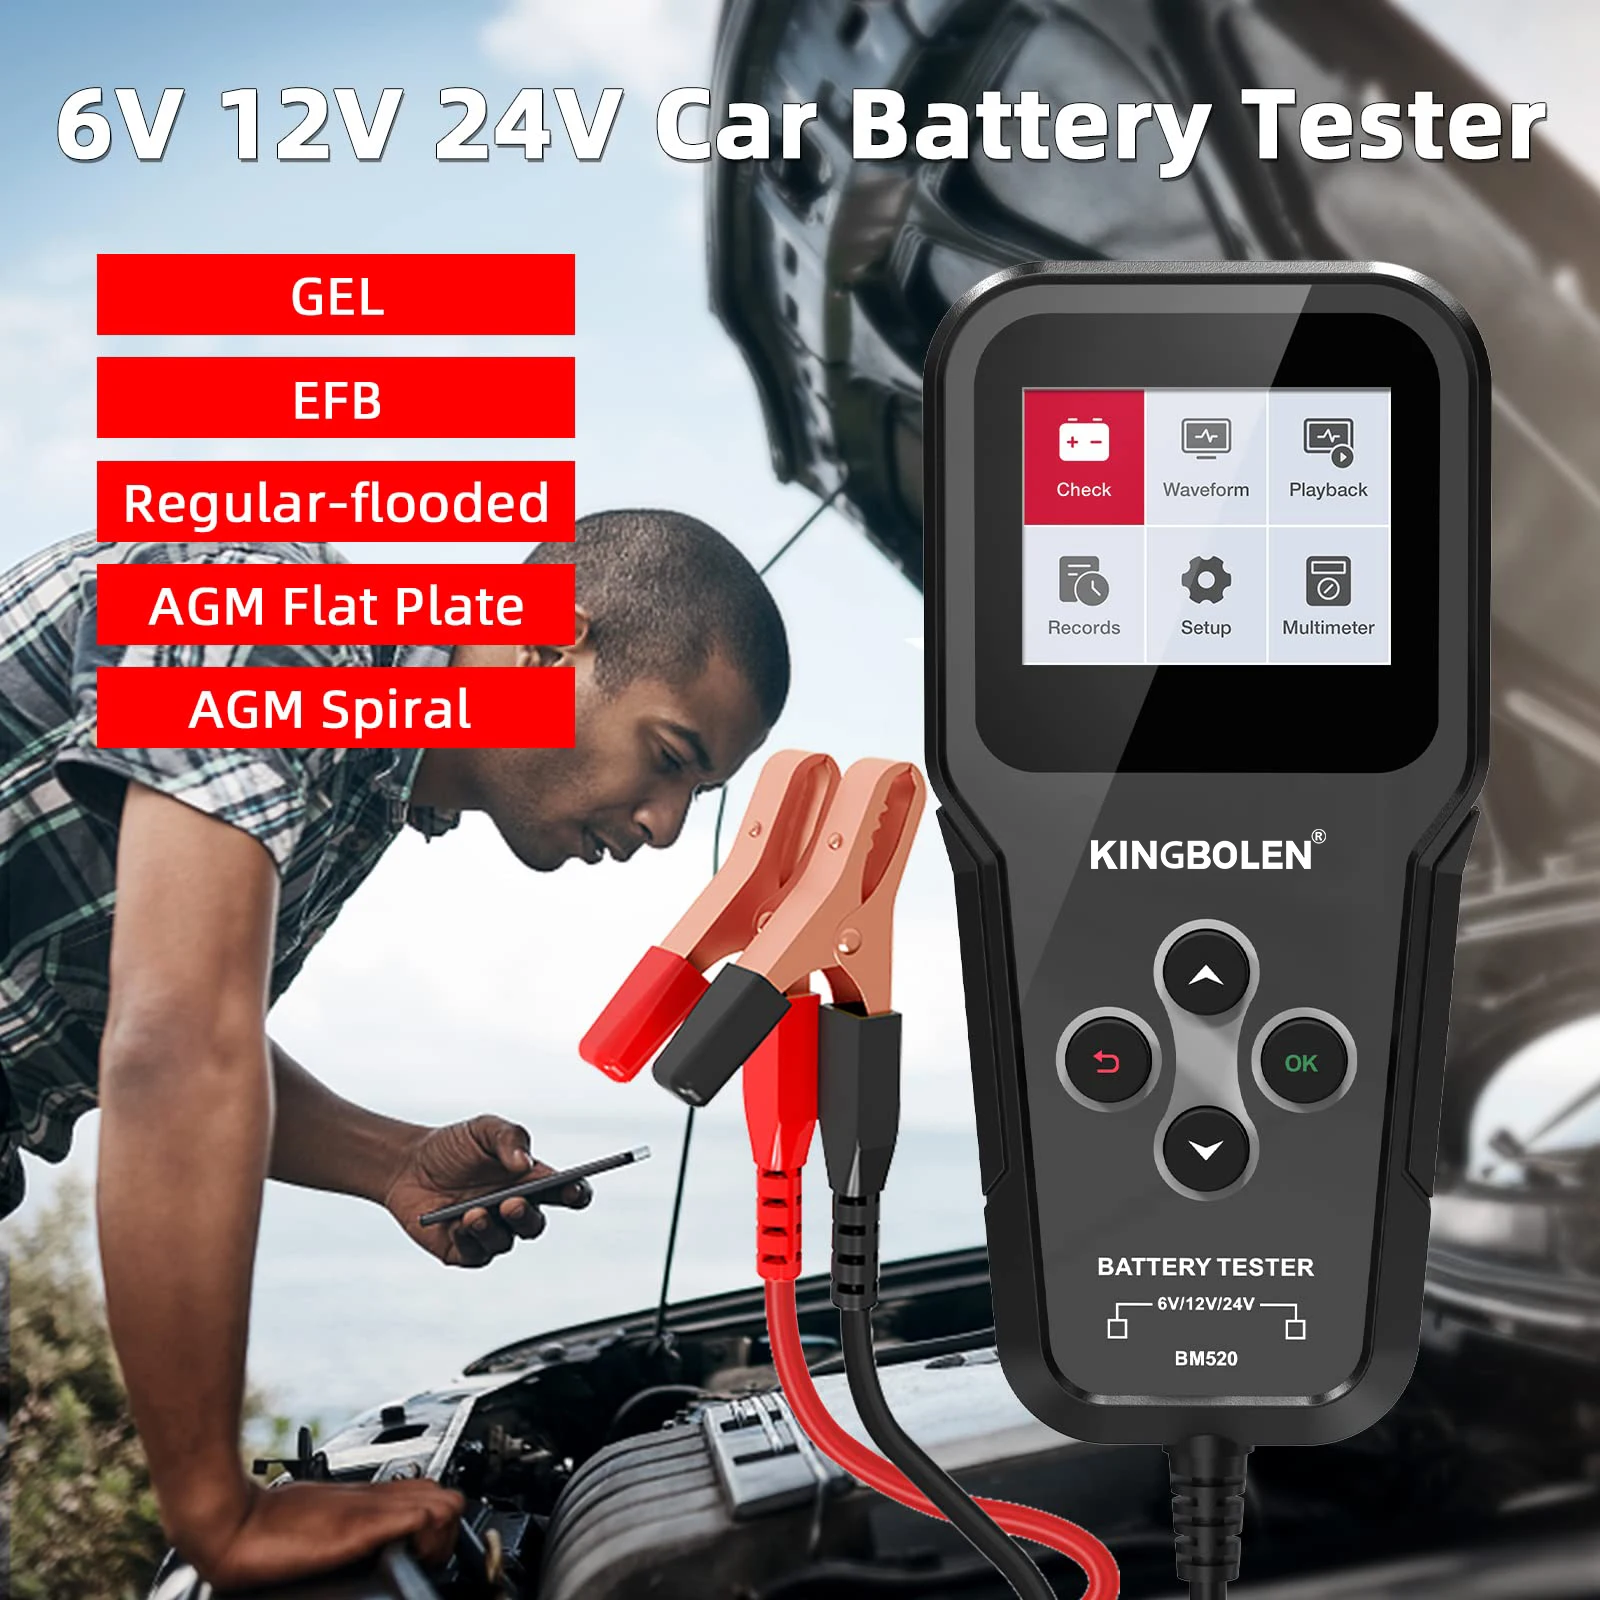 KINGBOLEN BM550 Car Battery Tester, 6V/12V/24V 100-2000 CCA Voltage Battery  Tester Digital Automotive Battery Analyzer for Cars Trucks Motorcycles 